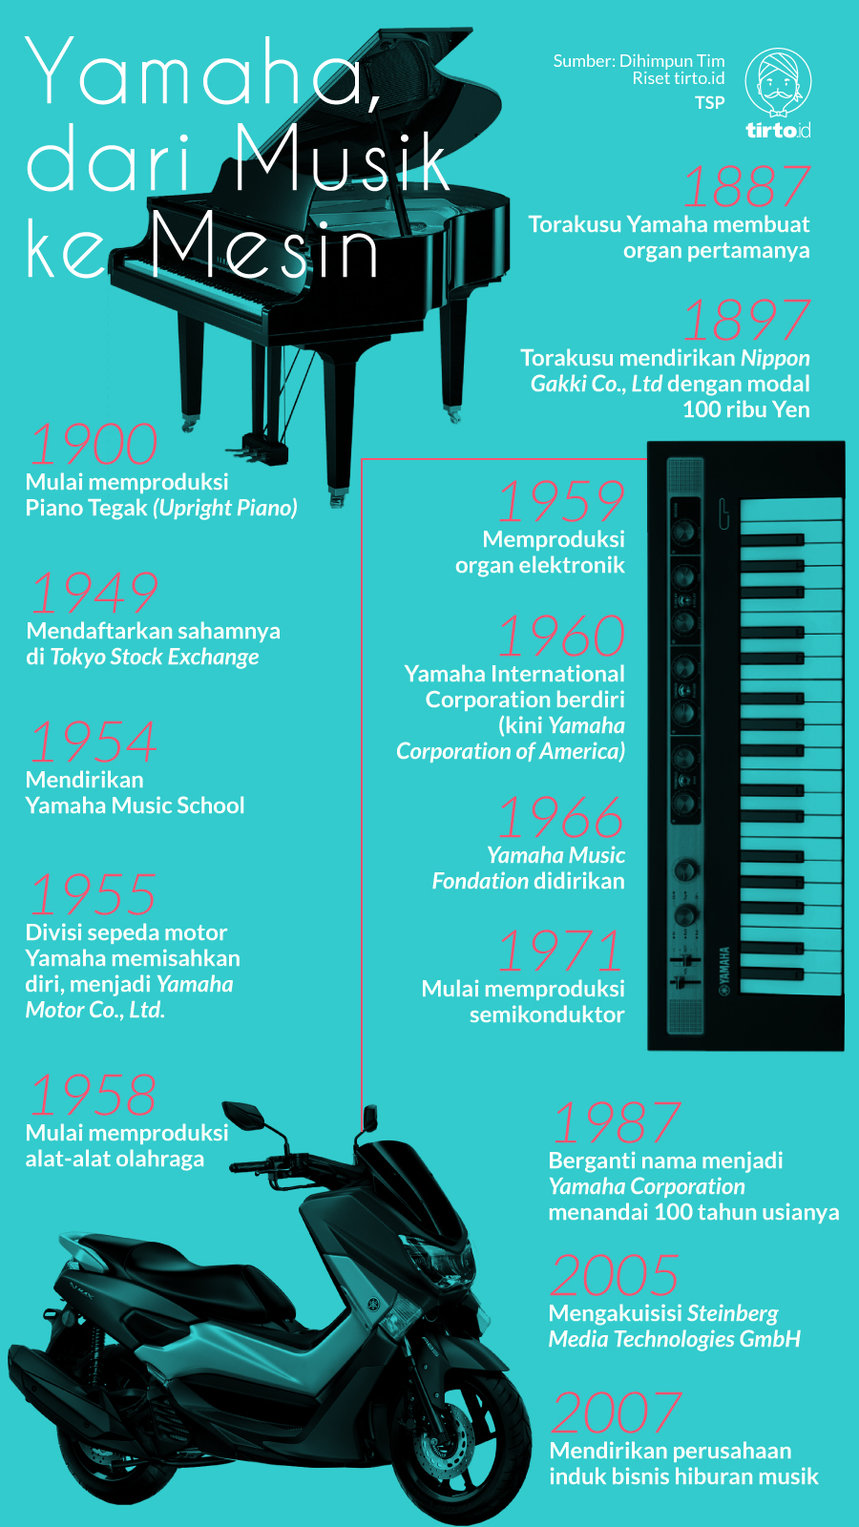 Infografik Yamaha dari Musik ke mesin